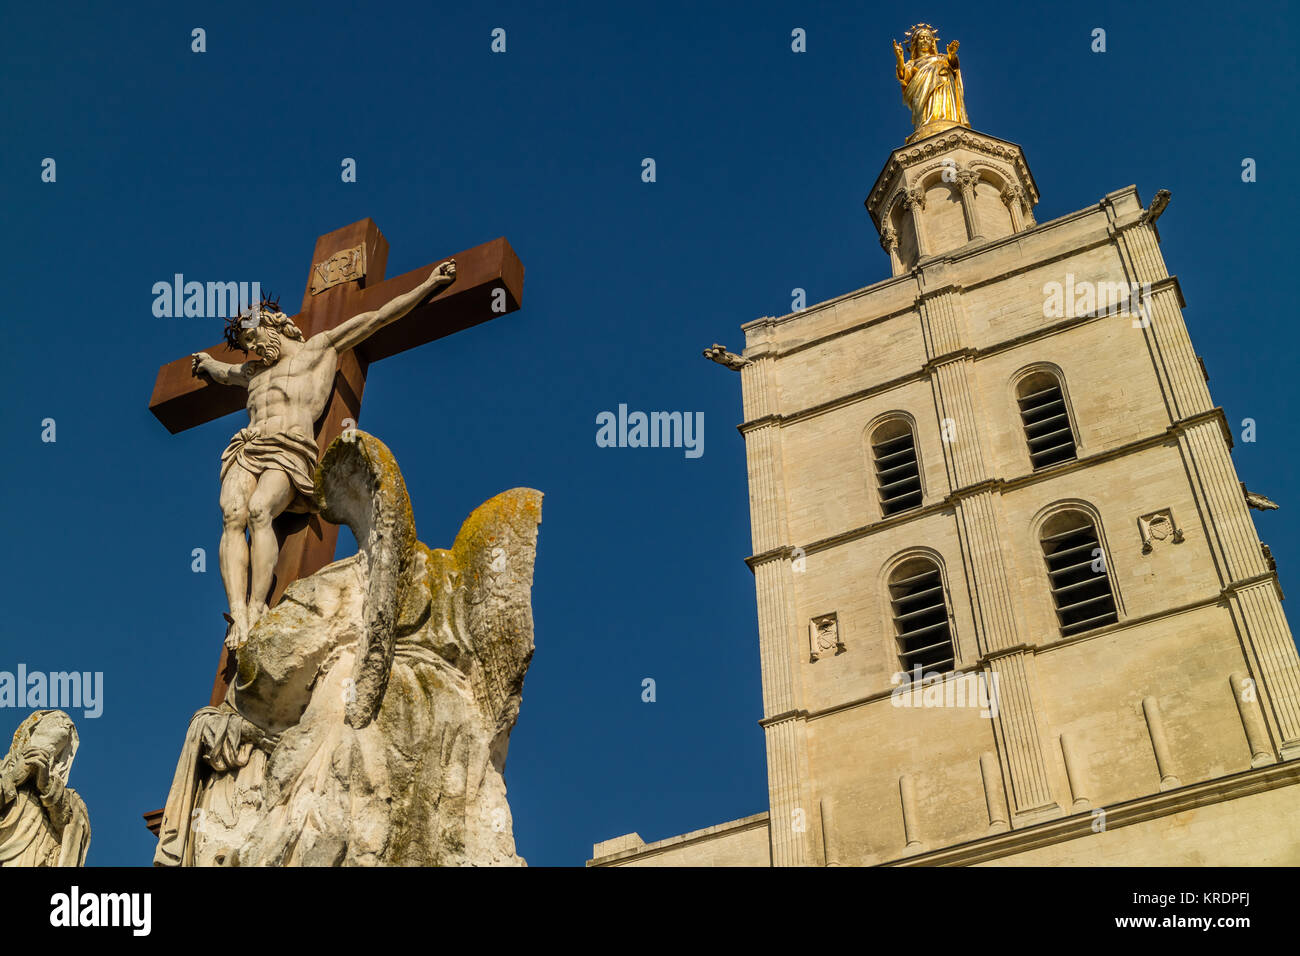 Statuen und Turm aus dem 14. Jahrhundert Papstpalast, Avignon, Provence, Frankreich. 2017. Stockfoto